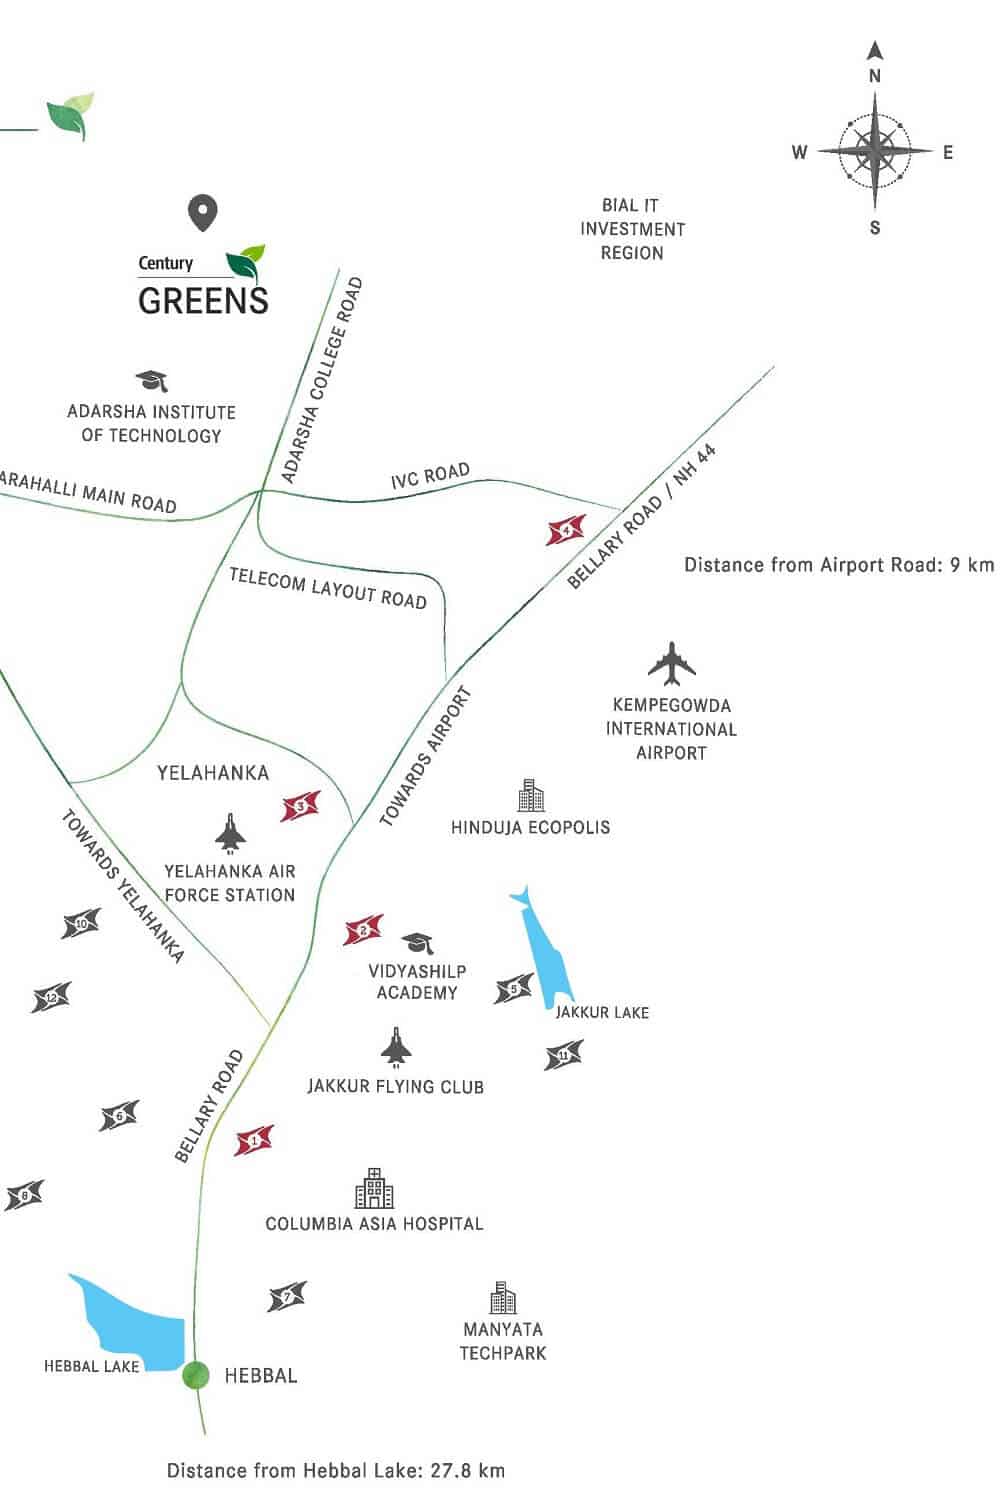 Century Greens Plots Location Map